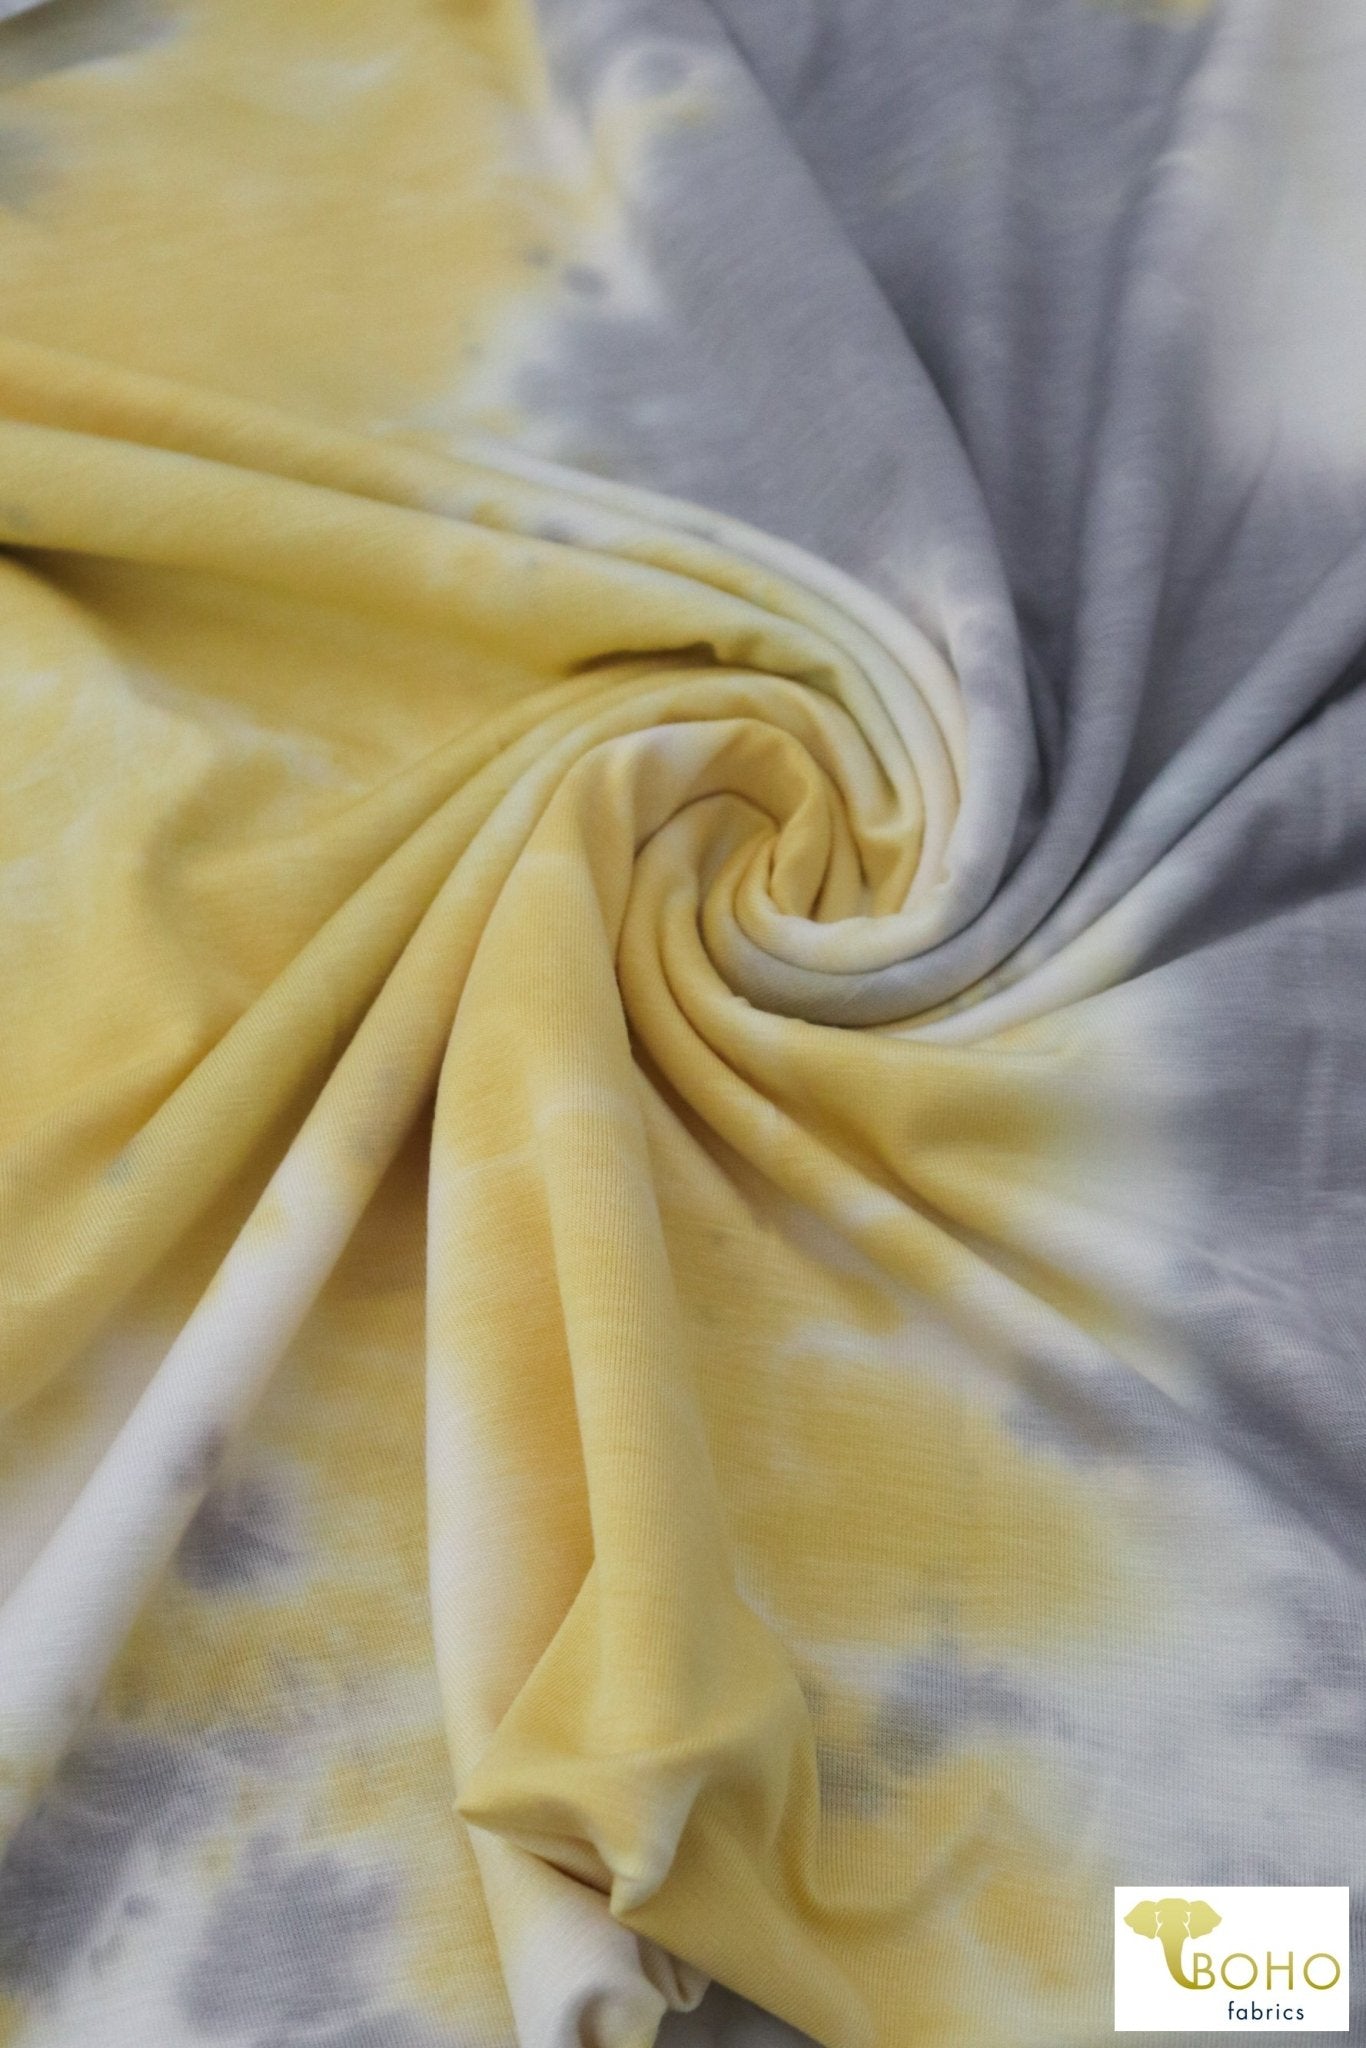 Lightening Storm Tie Dye, Rayon Spandex Knit Print. RJP-314 - Boho Fabrics